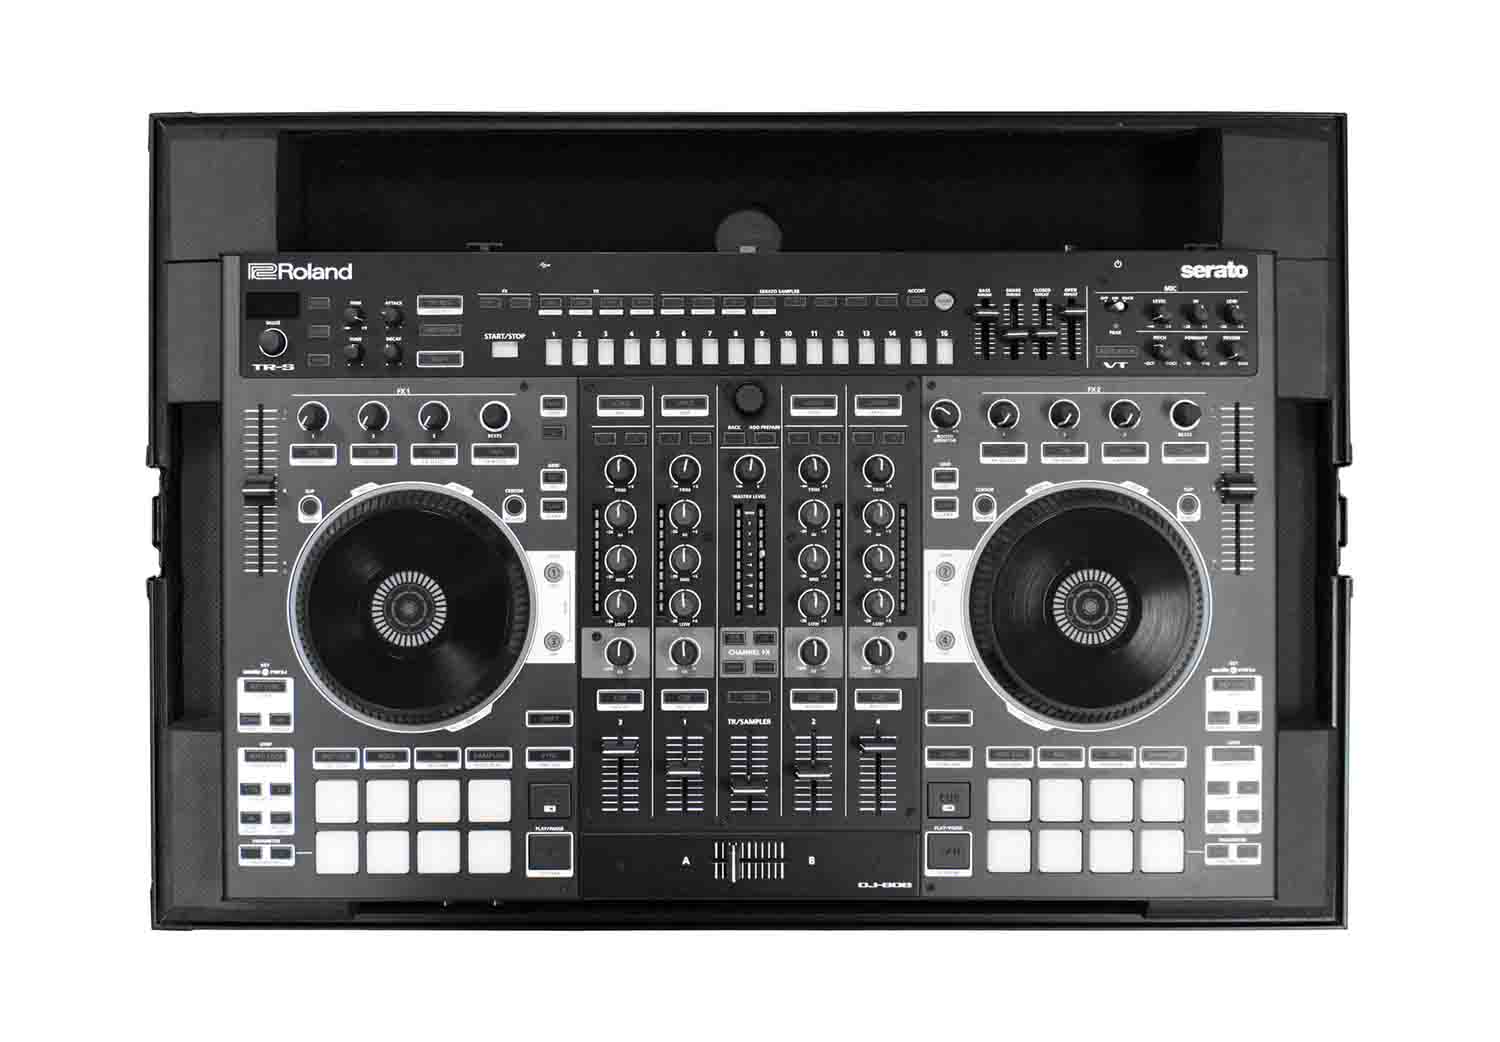 B-Stock: Odyssey FZRODJ808BL, Label Low-Profile Case for Roland DJ-808 DJ Controller - Black - Hollywood DJ